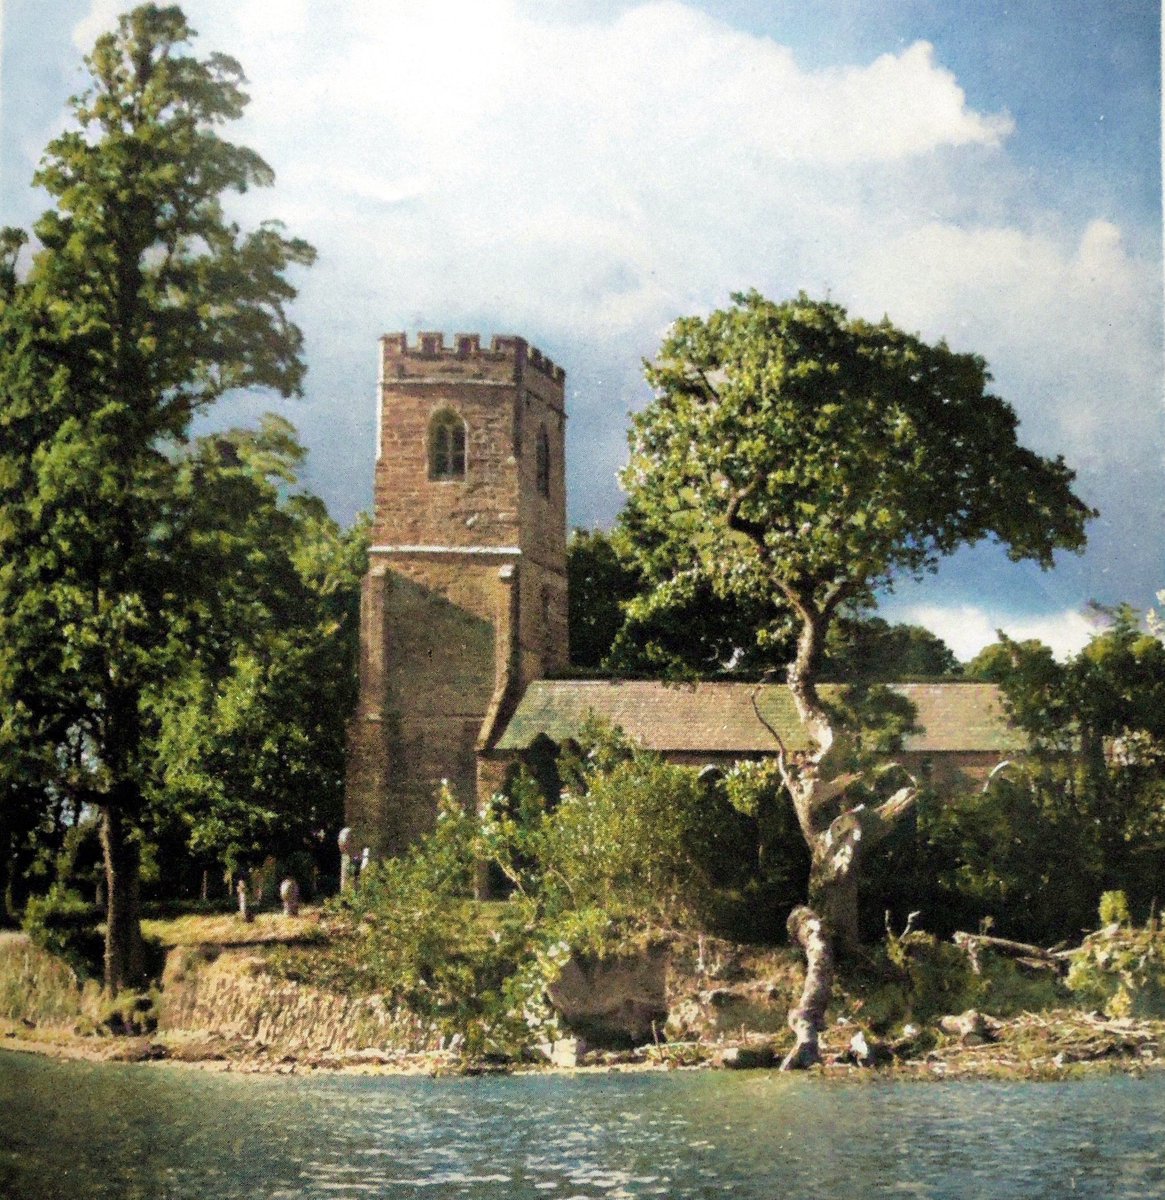 St Winnow church on the bank of the River Fowey near Lostwithiel, Cornwall ~1955